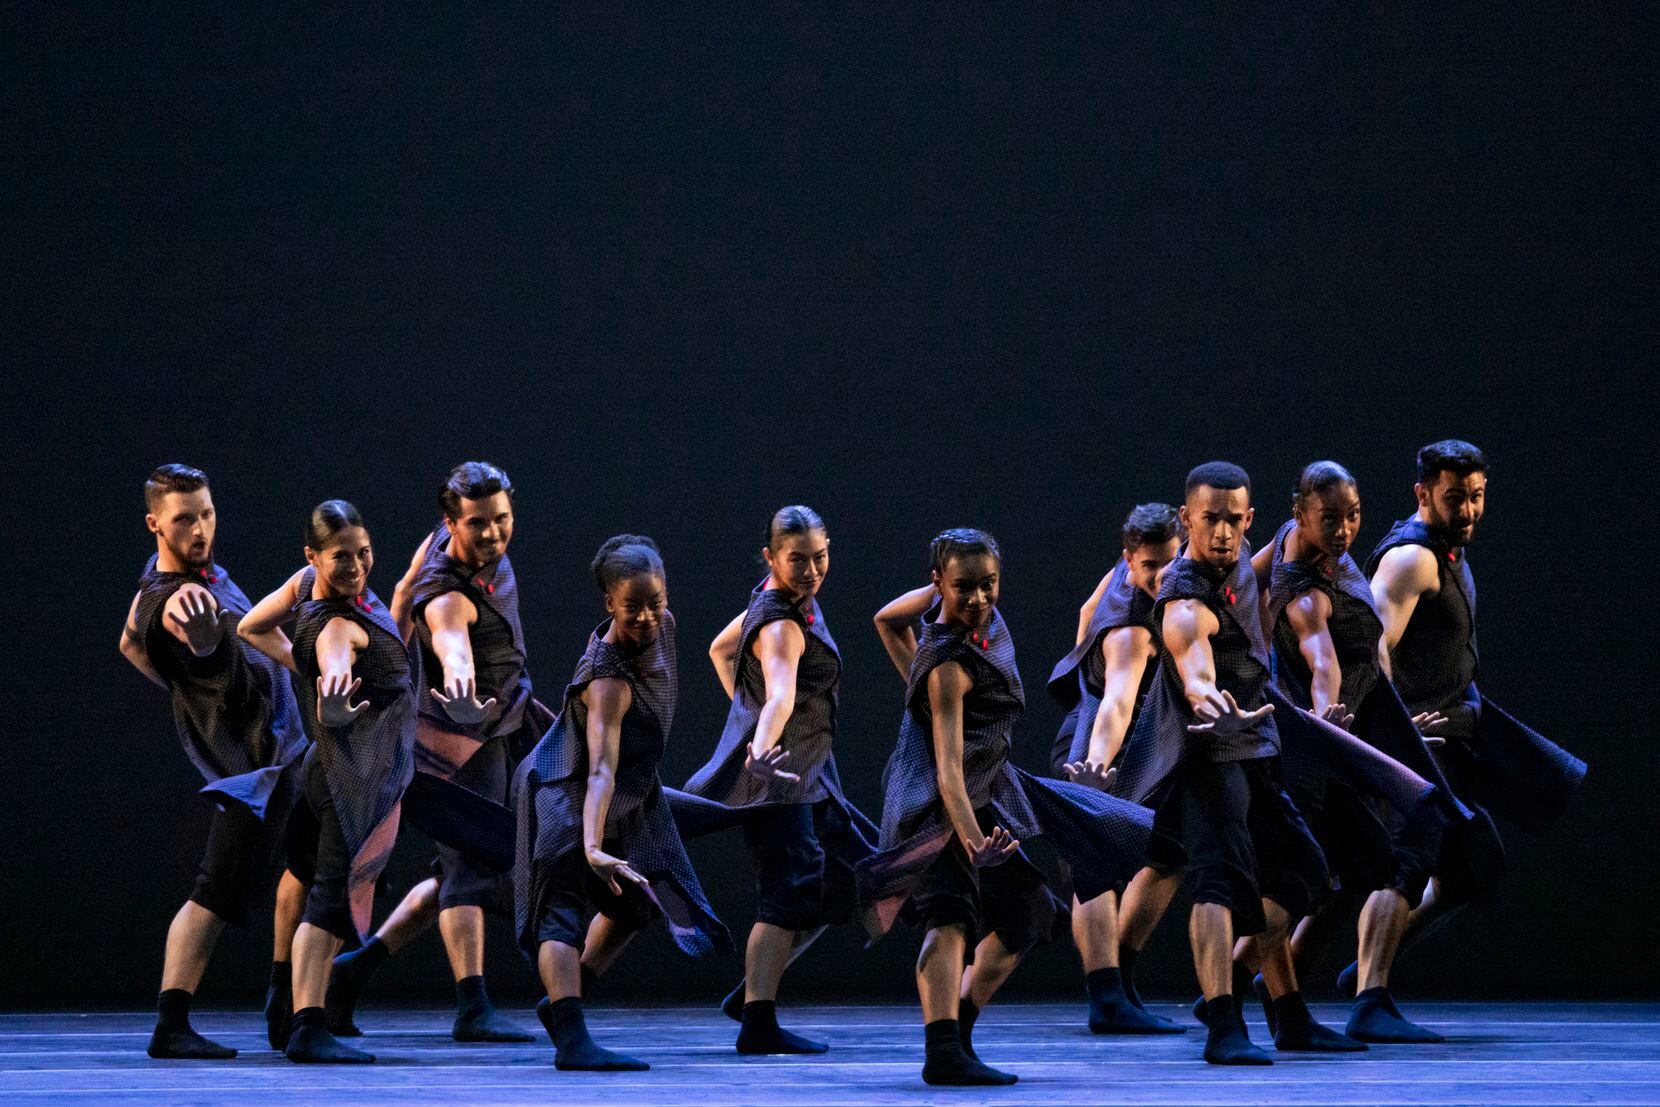 Ballet Hispánico in "18+1," a mambo piece choreographed by Gustavo Ramirez Sansano.